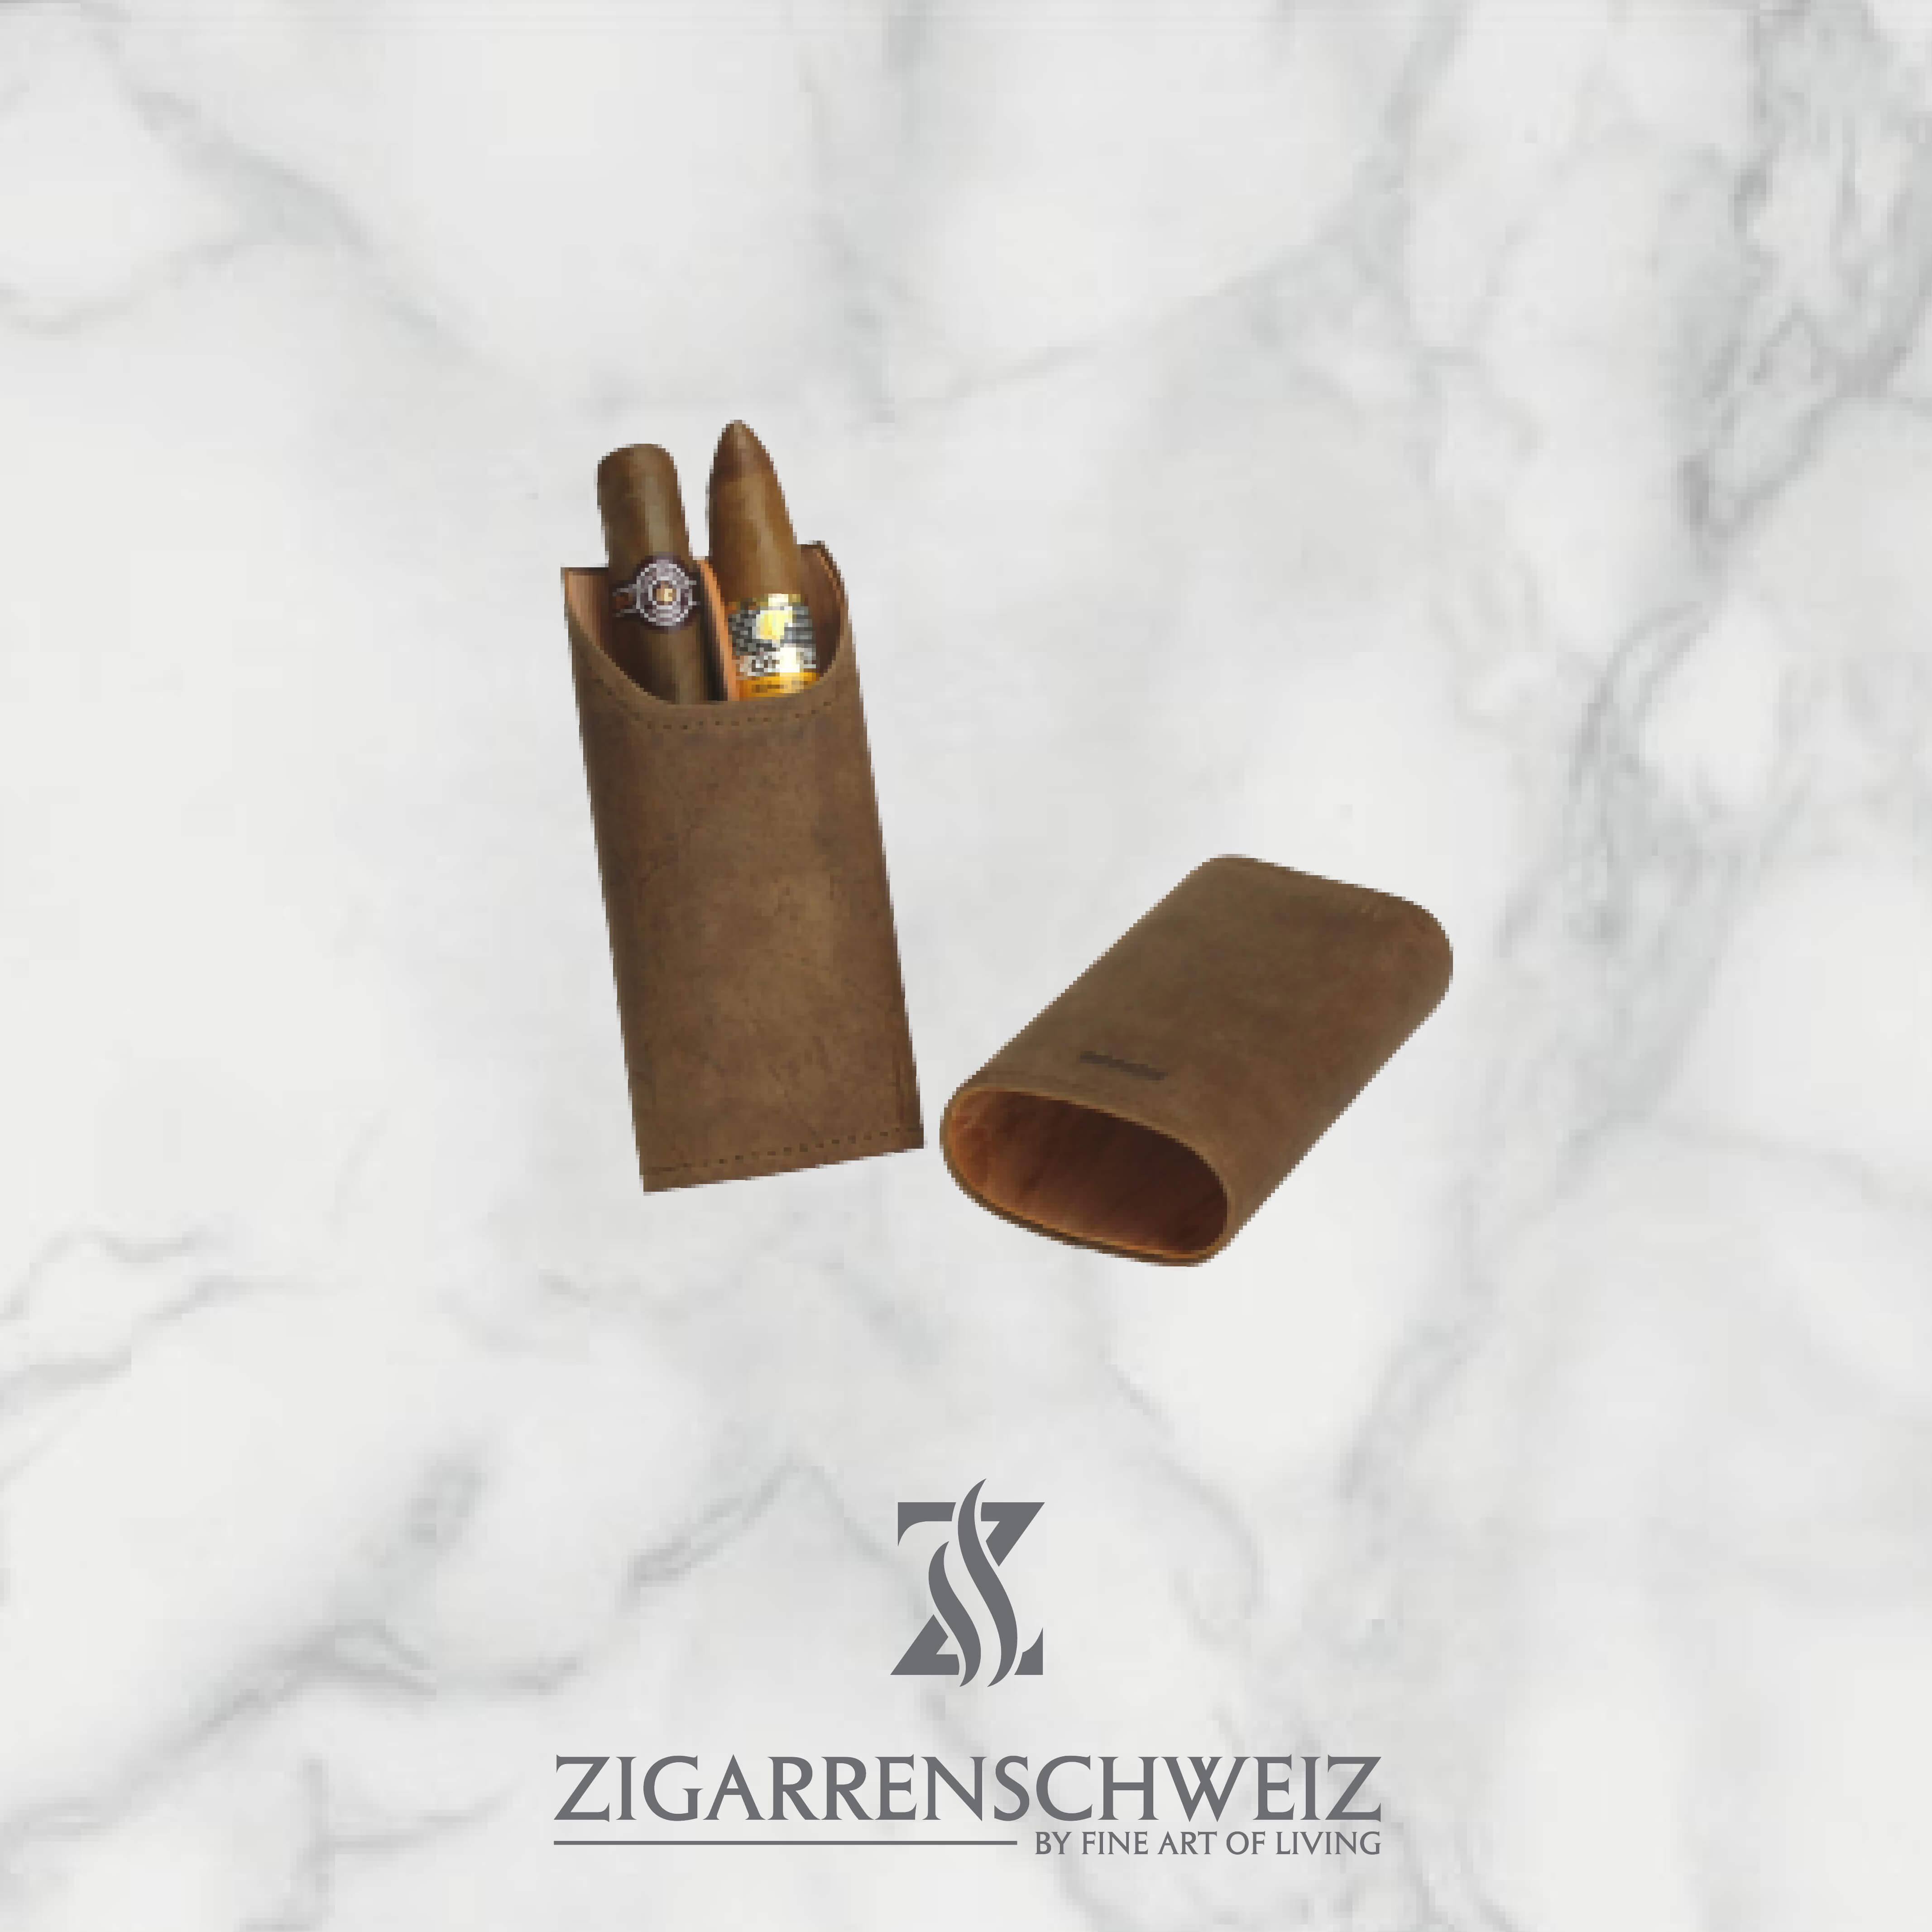 Adorini Zigarrenetui, Material: Echtleder, Kapazität: 2-3 Zigarren, Farbe: Braun, mit Divider